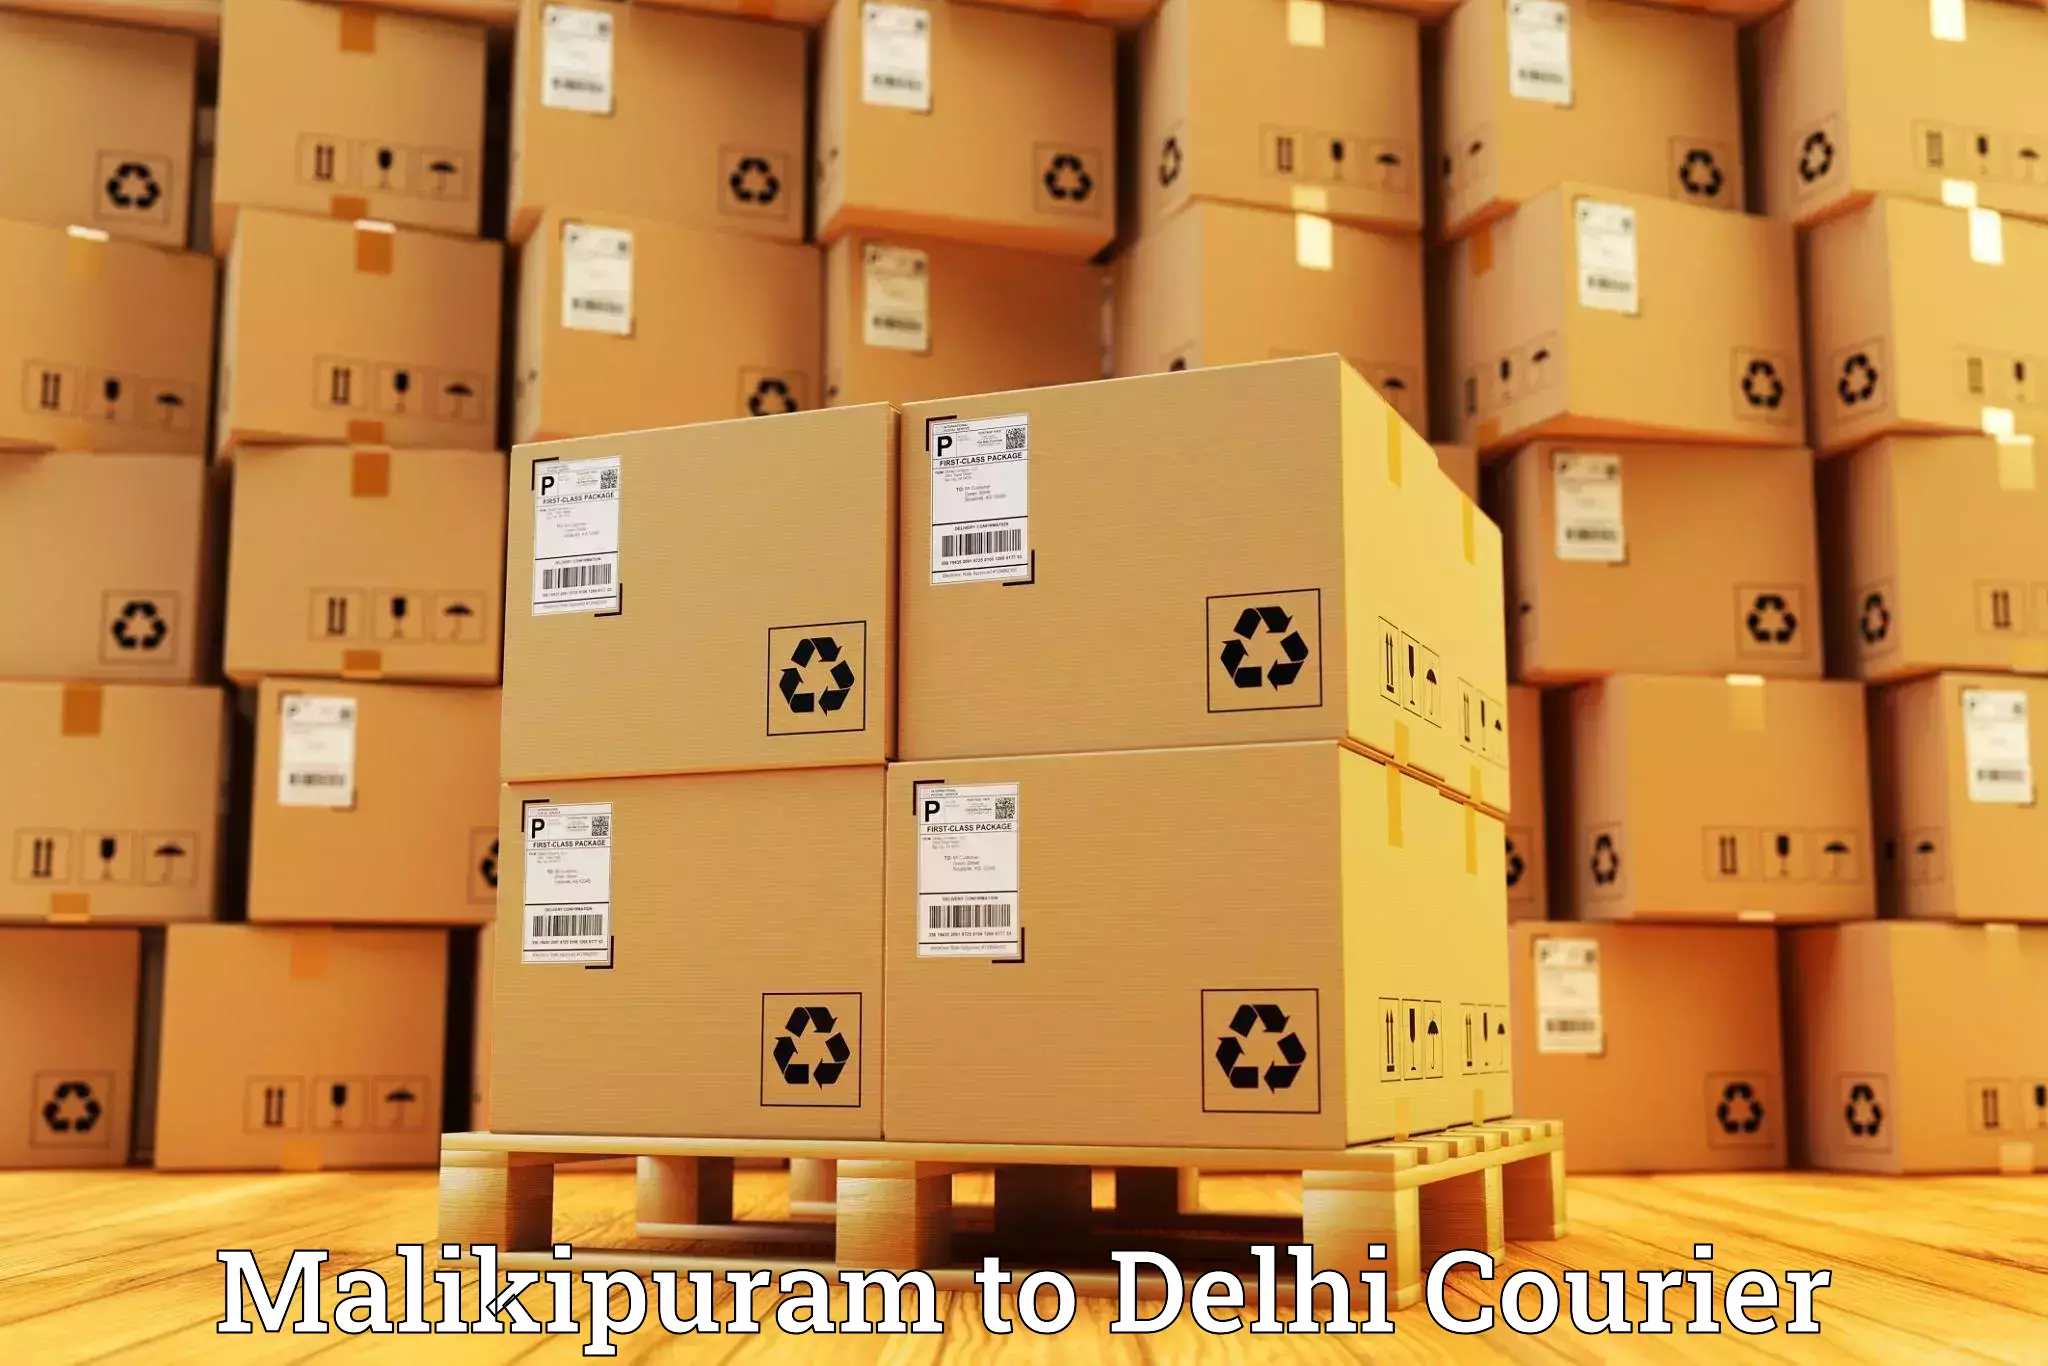 Urban courier service Malikipuram to Delhi